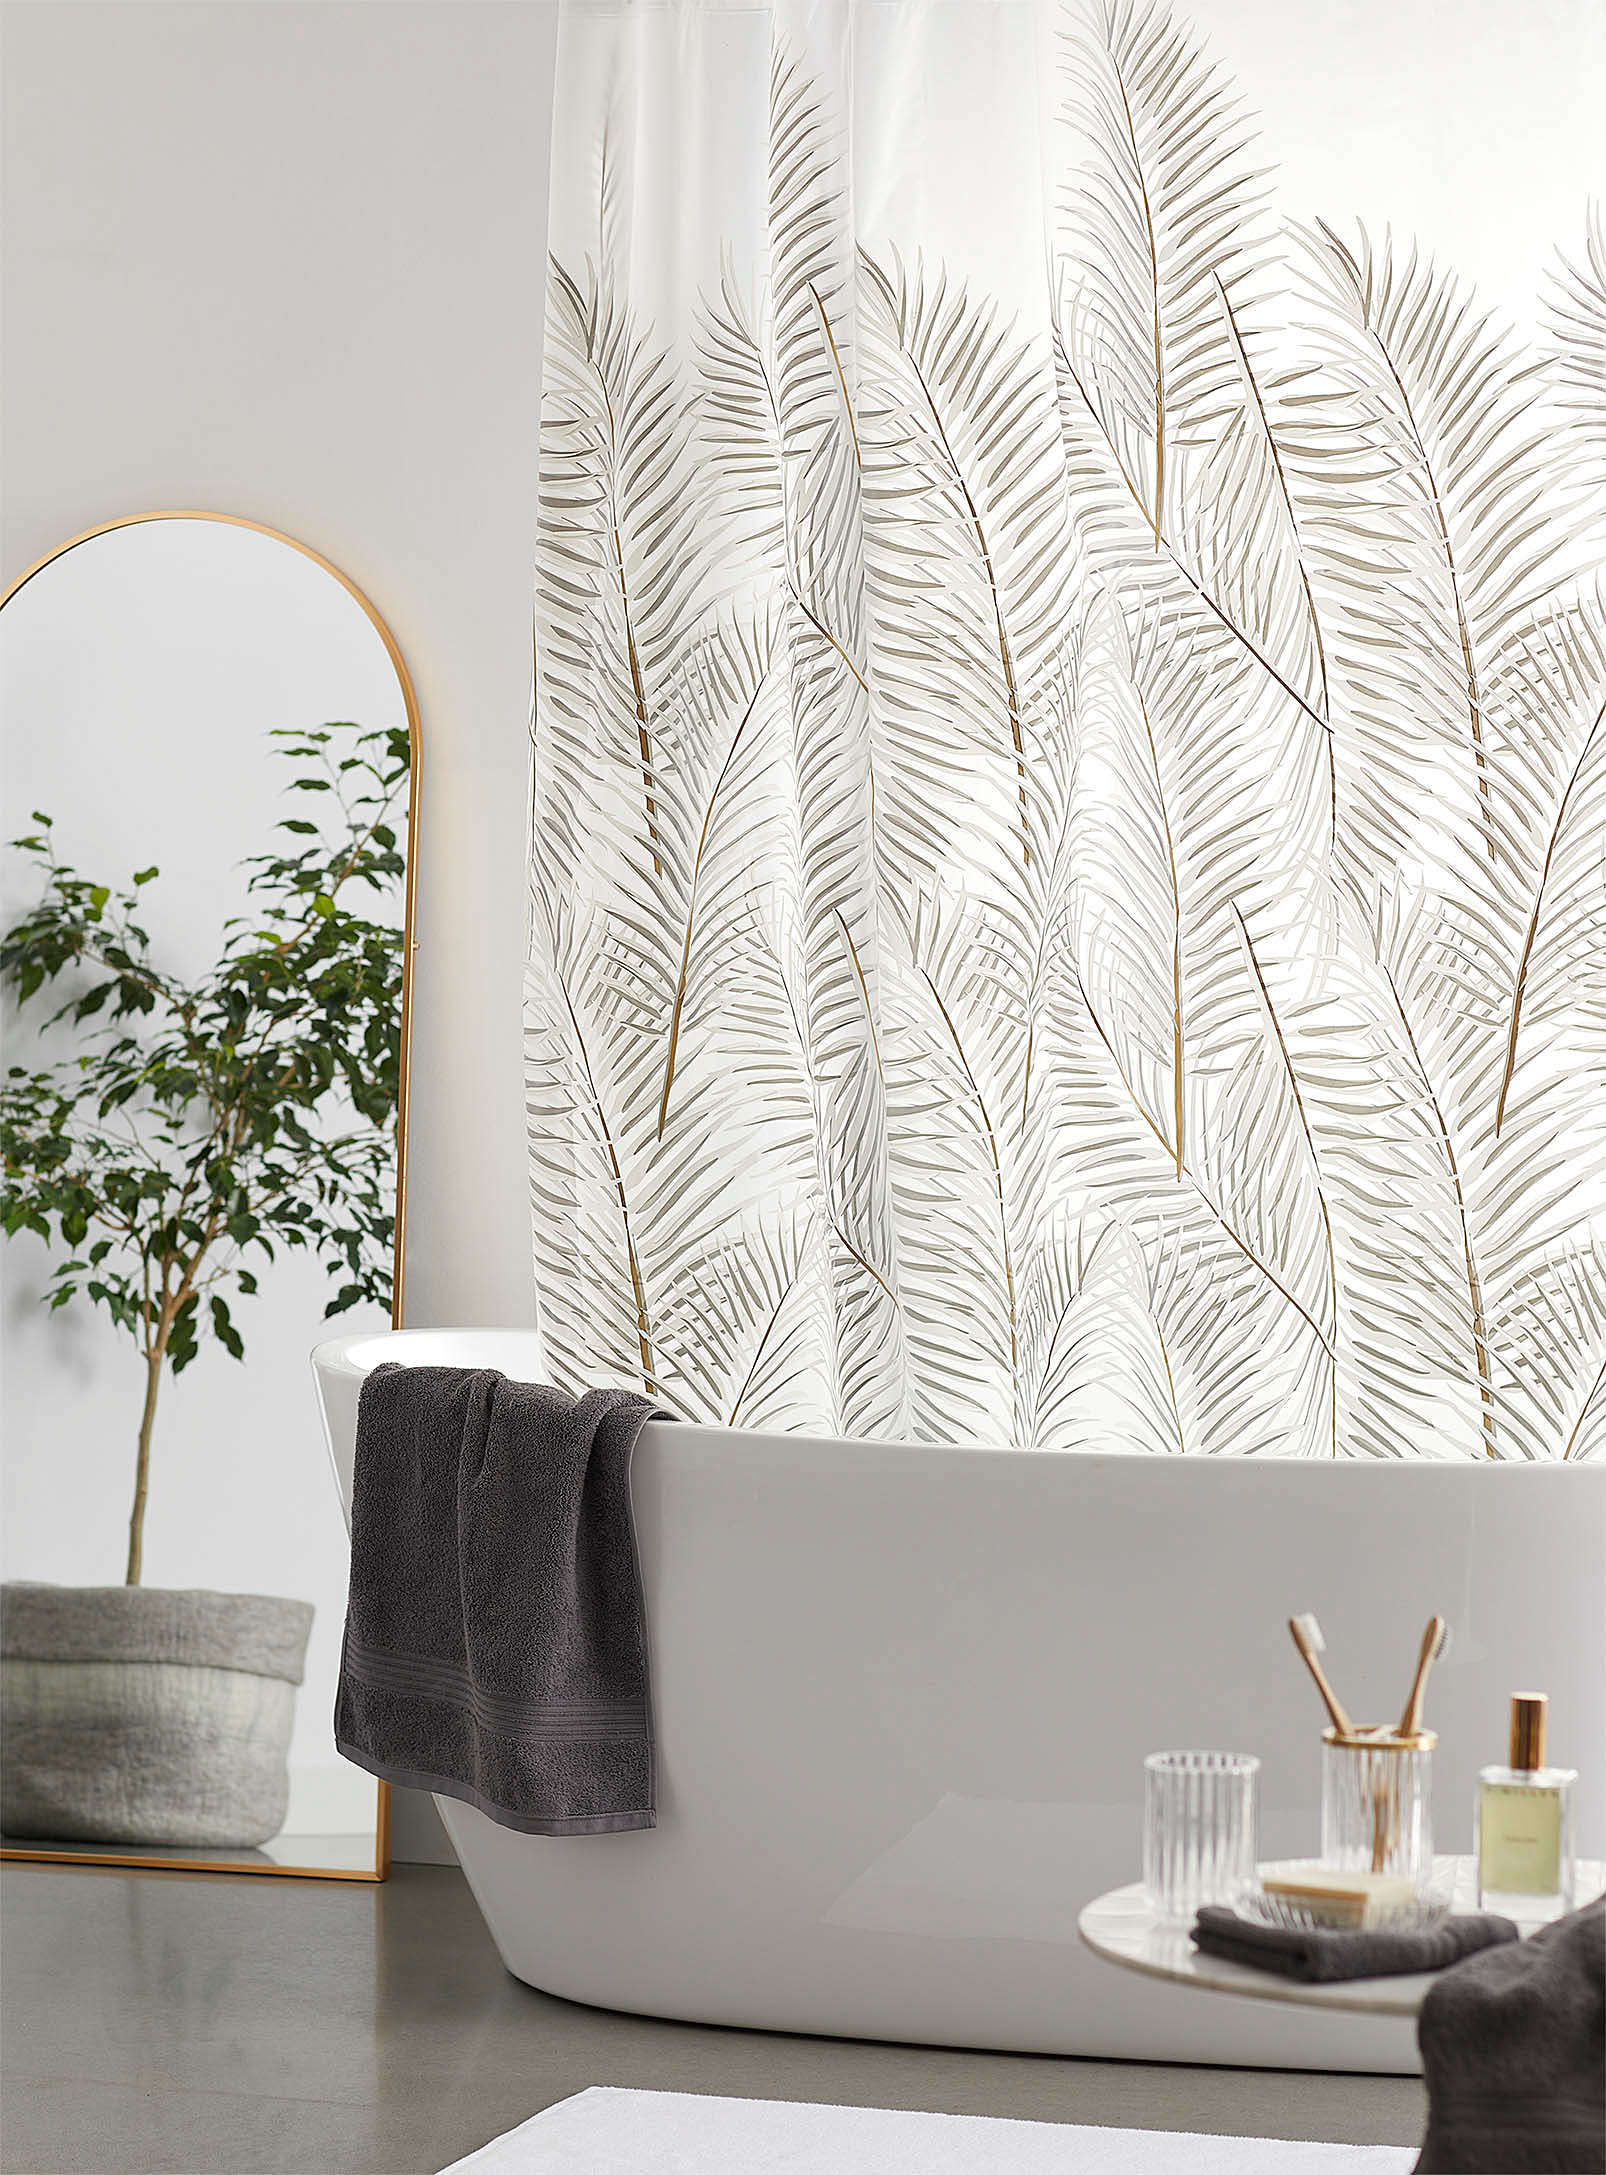 Simons Maison Palm Leaves Peva Shower Curtain In Patterned Ecru